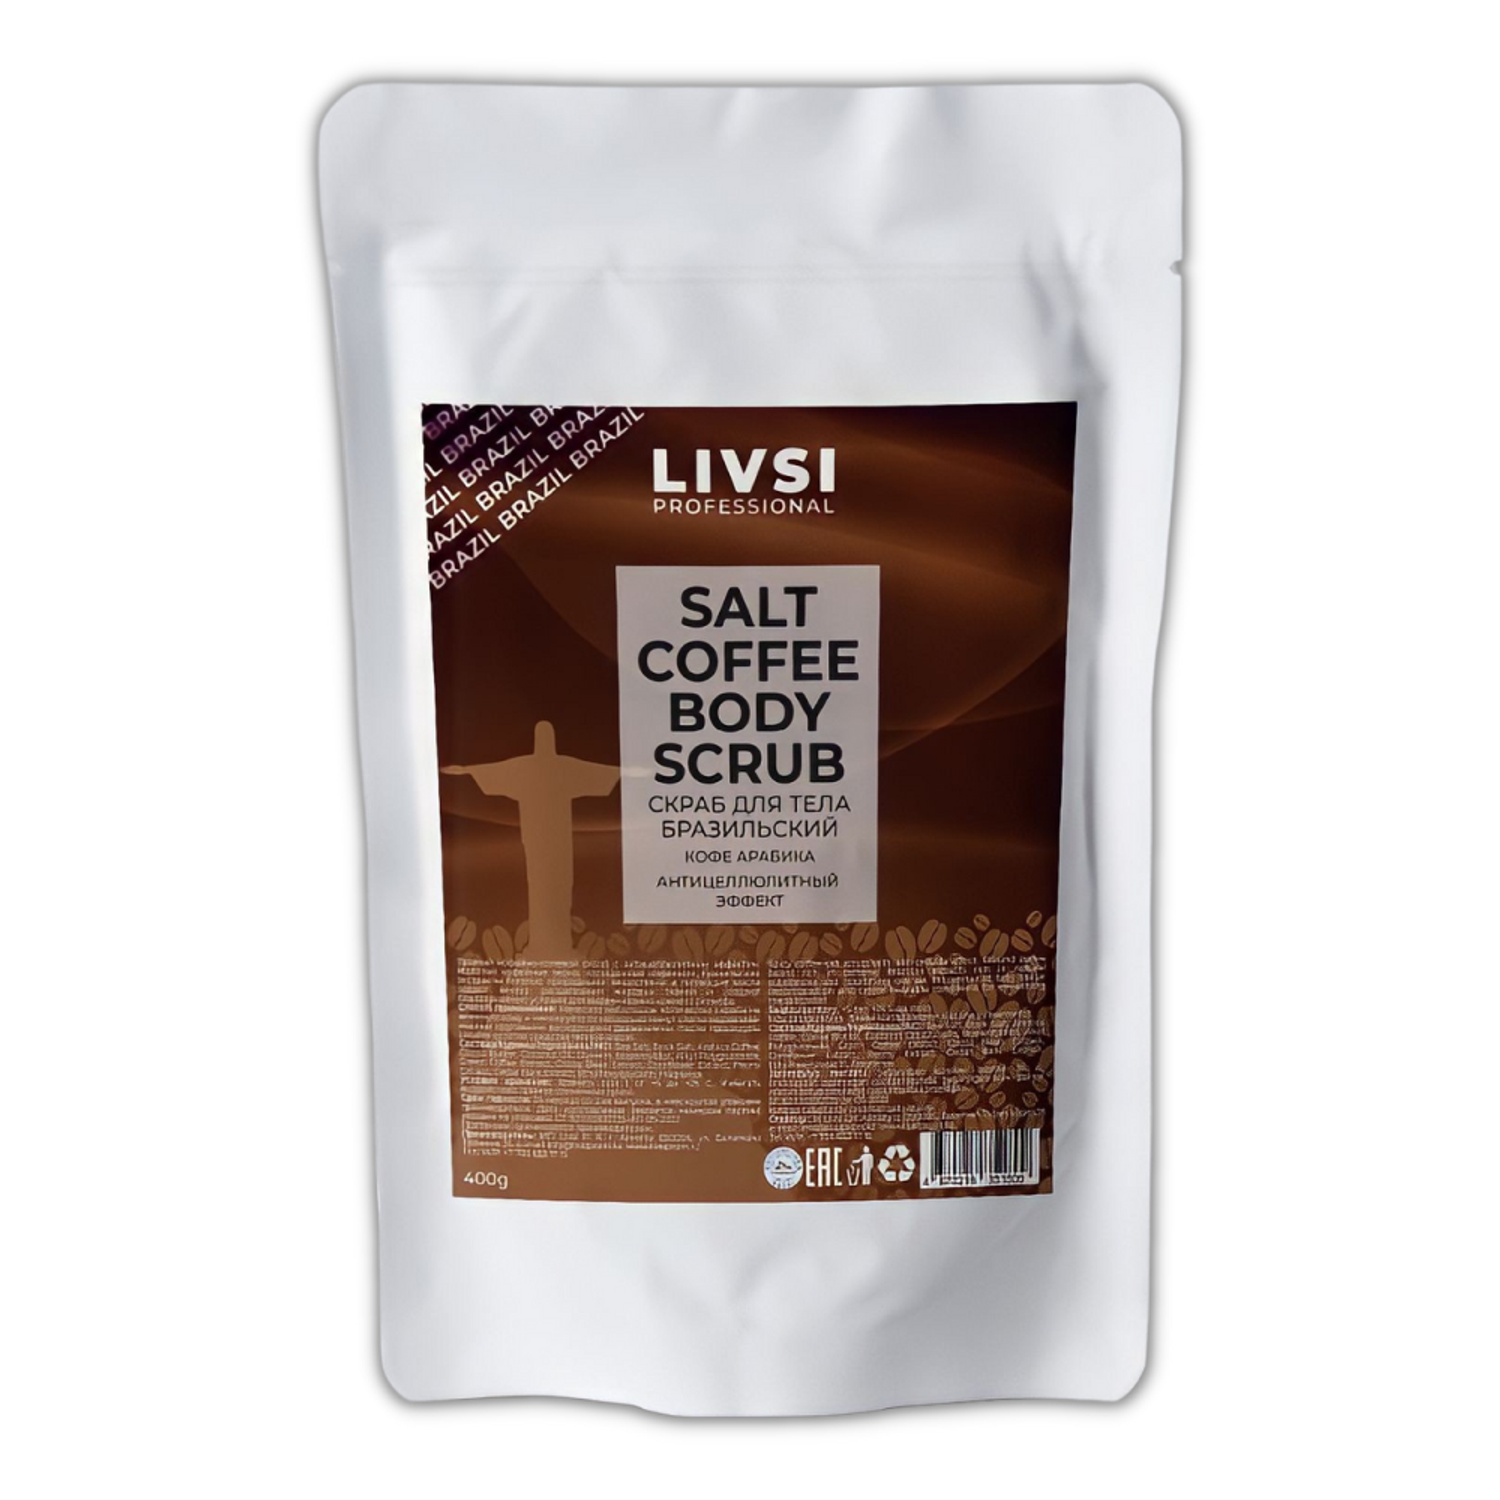 Скраб для тела LIVSI PROFESSIONAL Coffee Sult Body Scrub Бразильский 400 g - фото 1